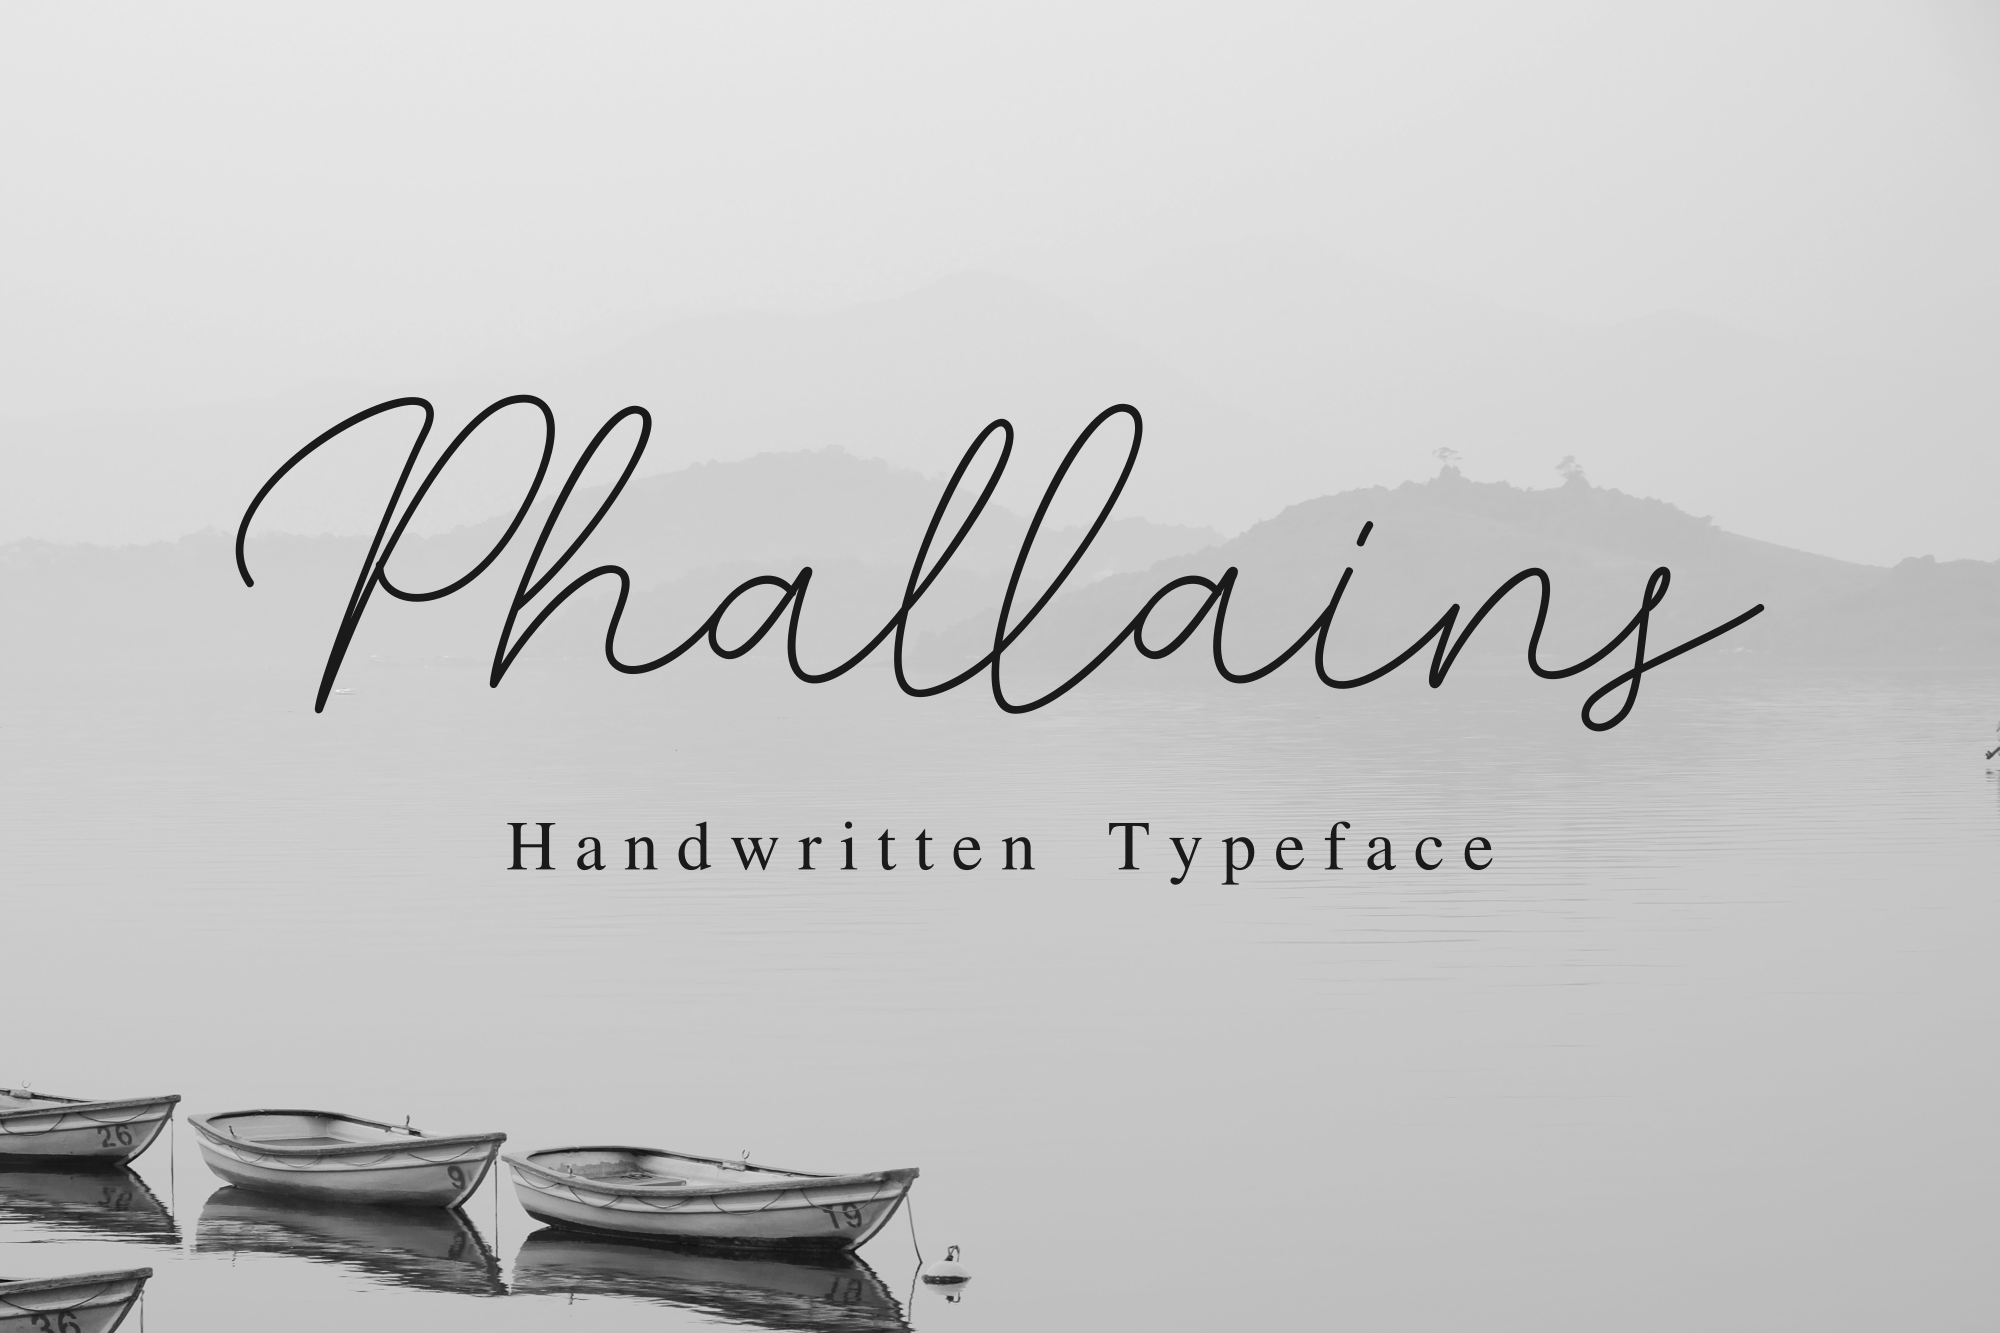 Phallains handwritten